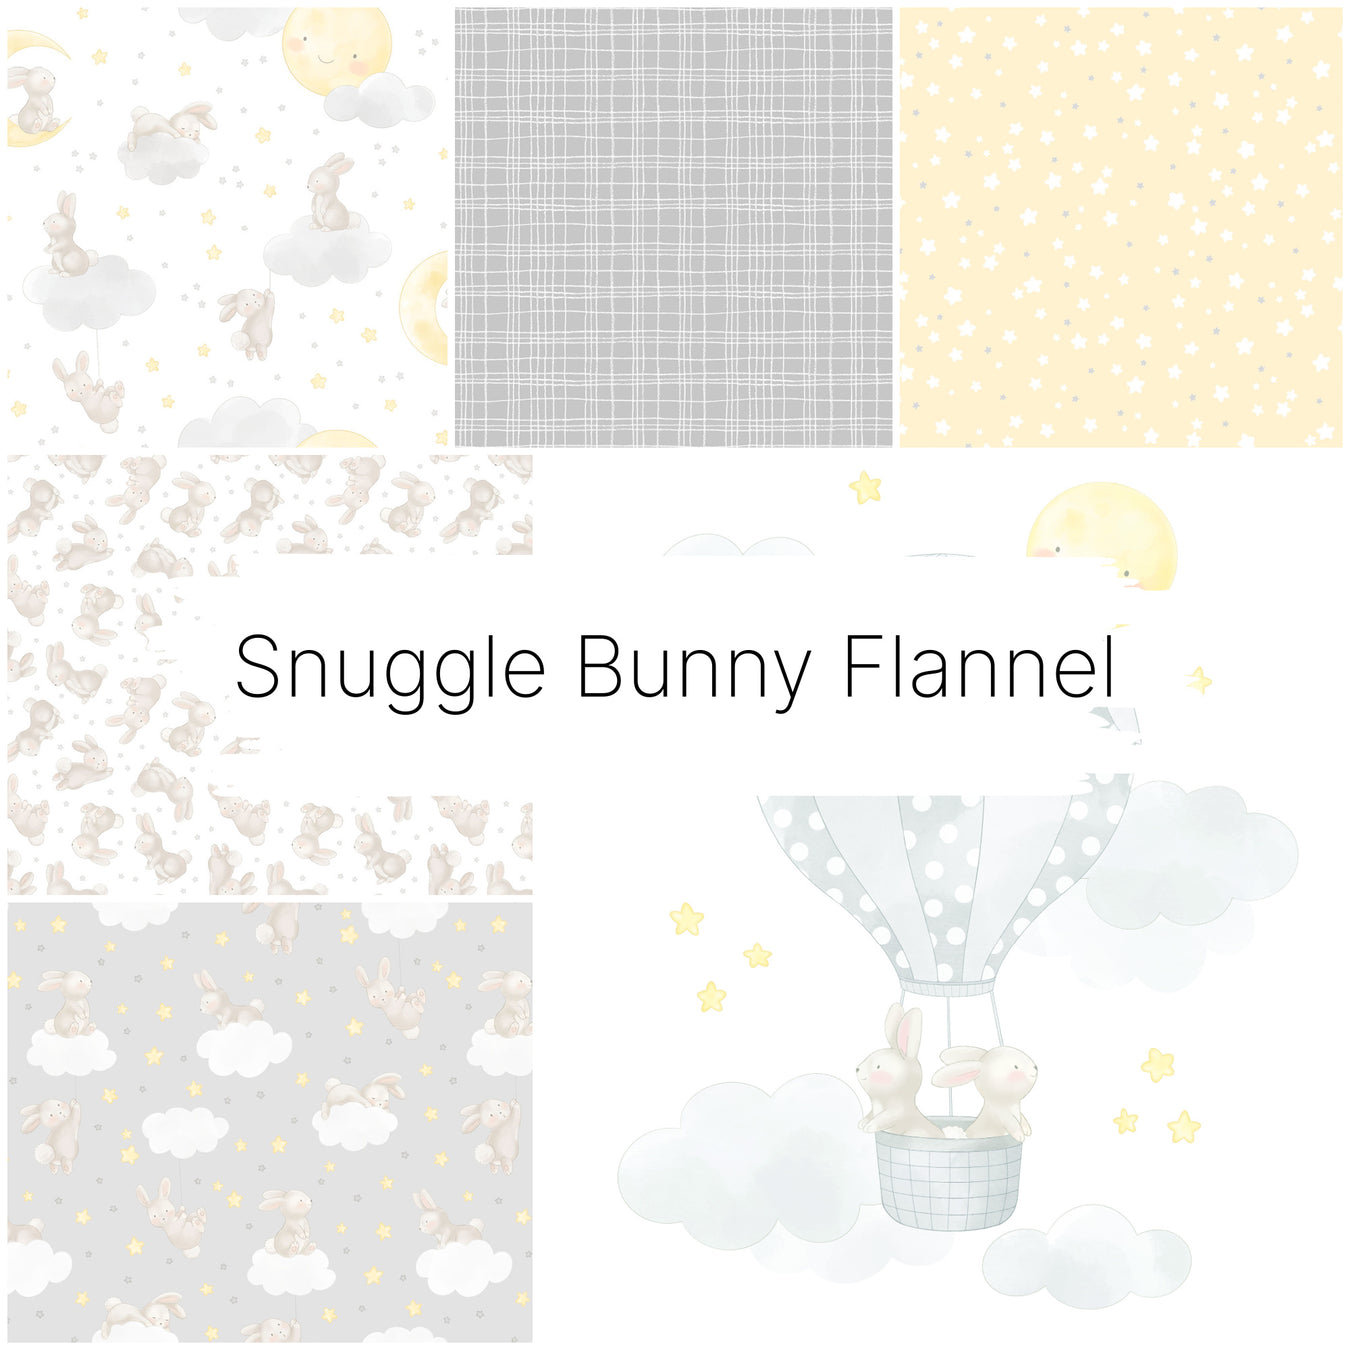 Snuggle Bunny Flannel